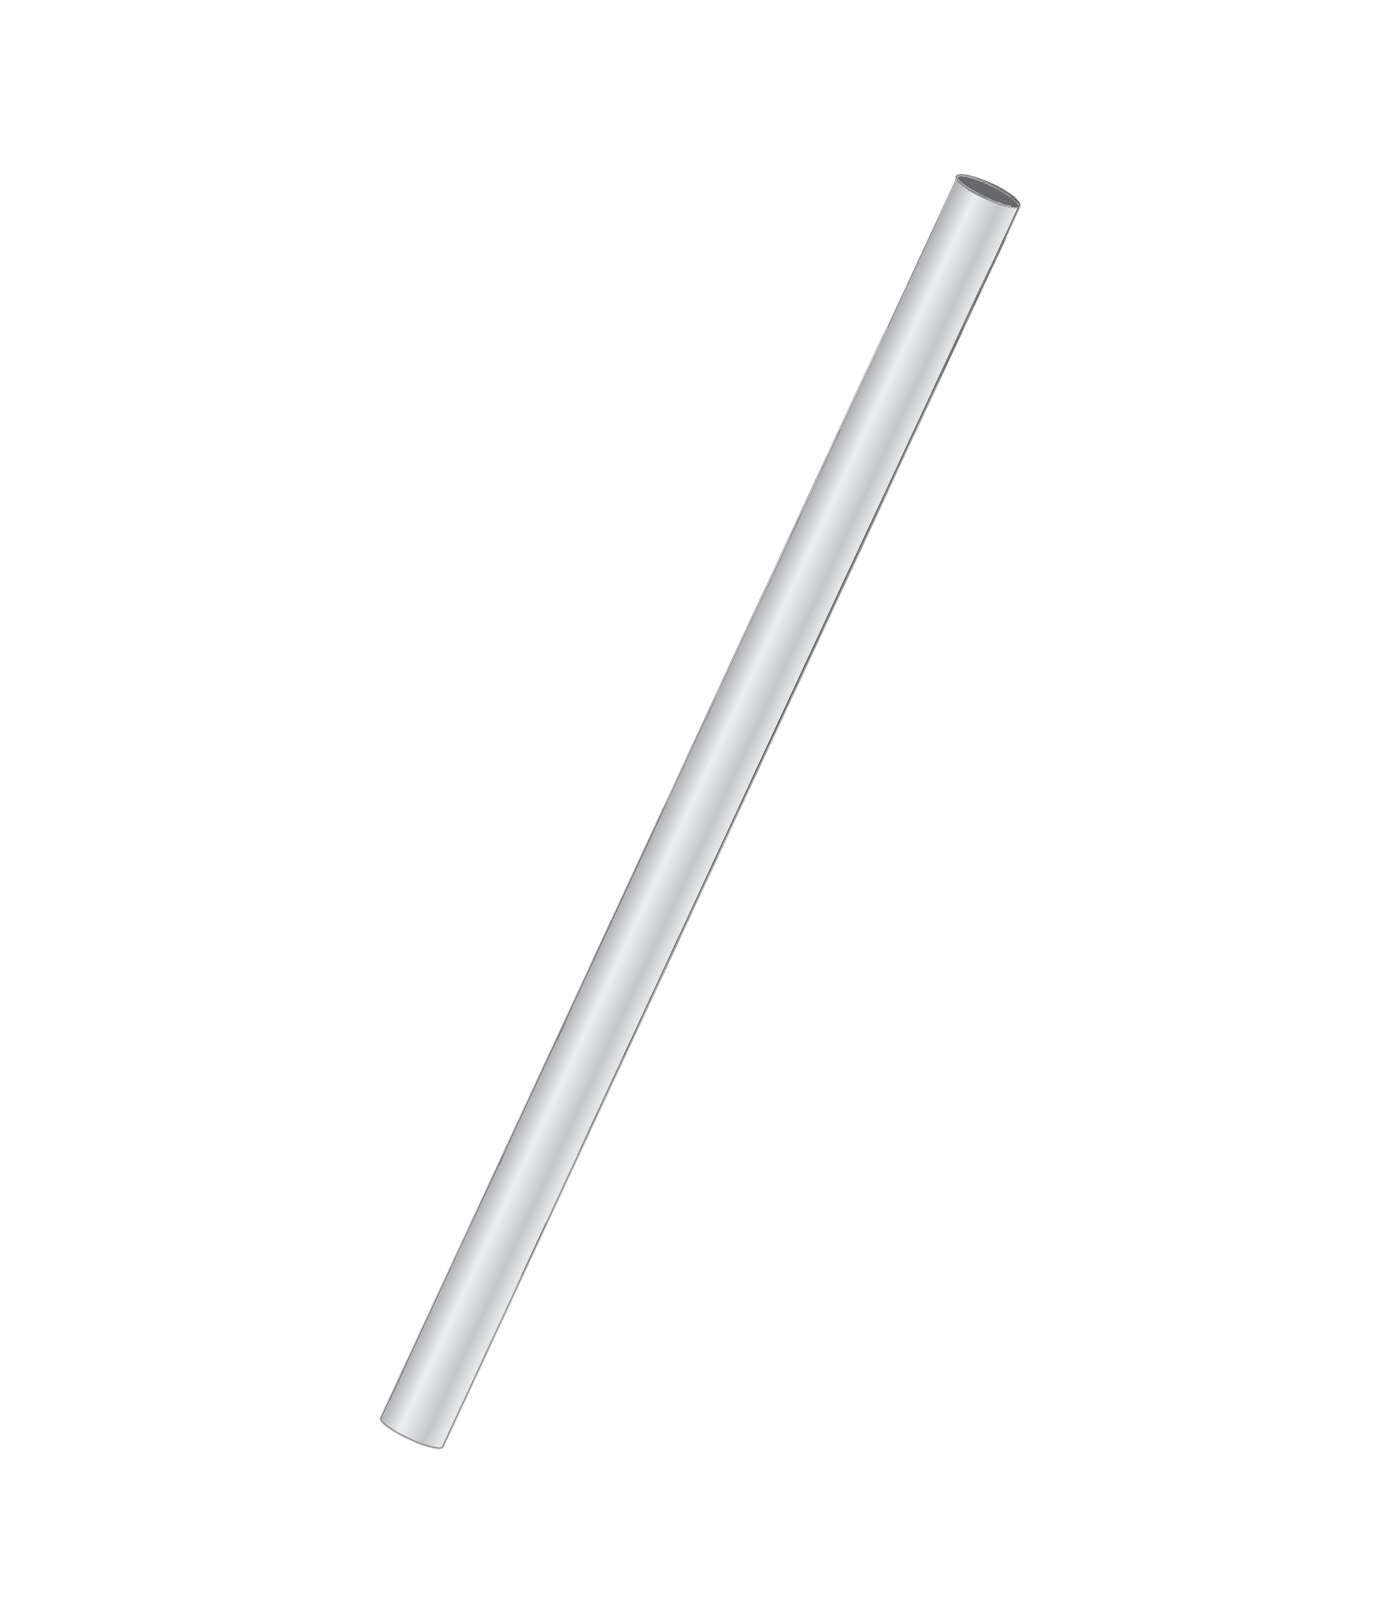  Tube ø35 mm, L 1.8 m, à enficher 